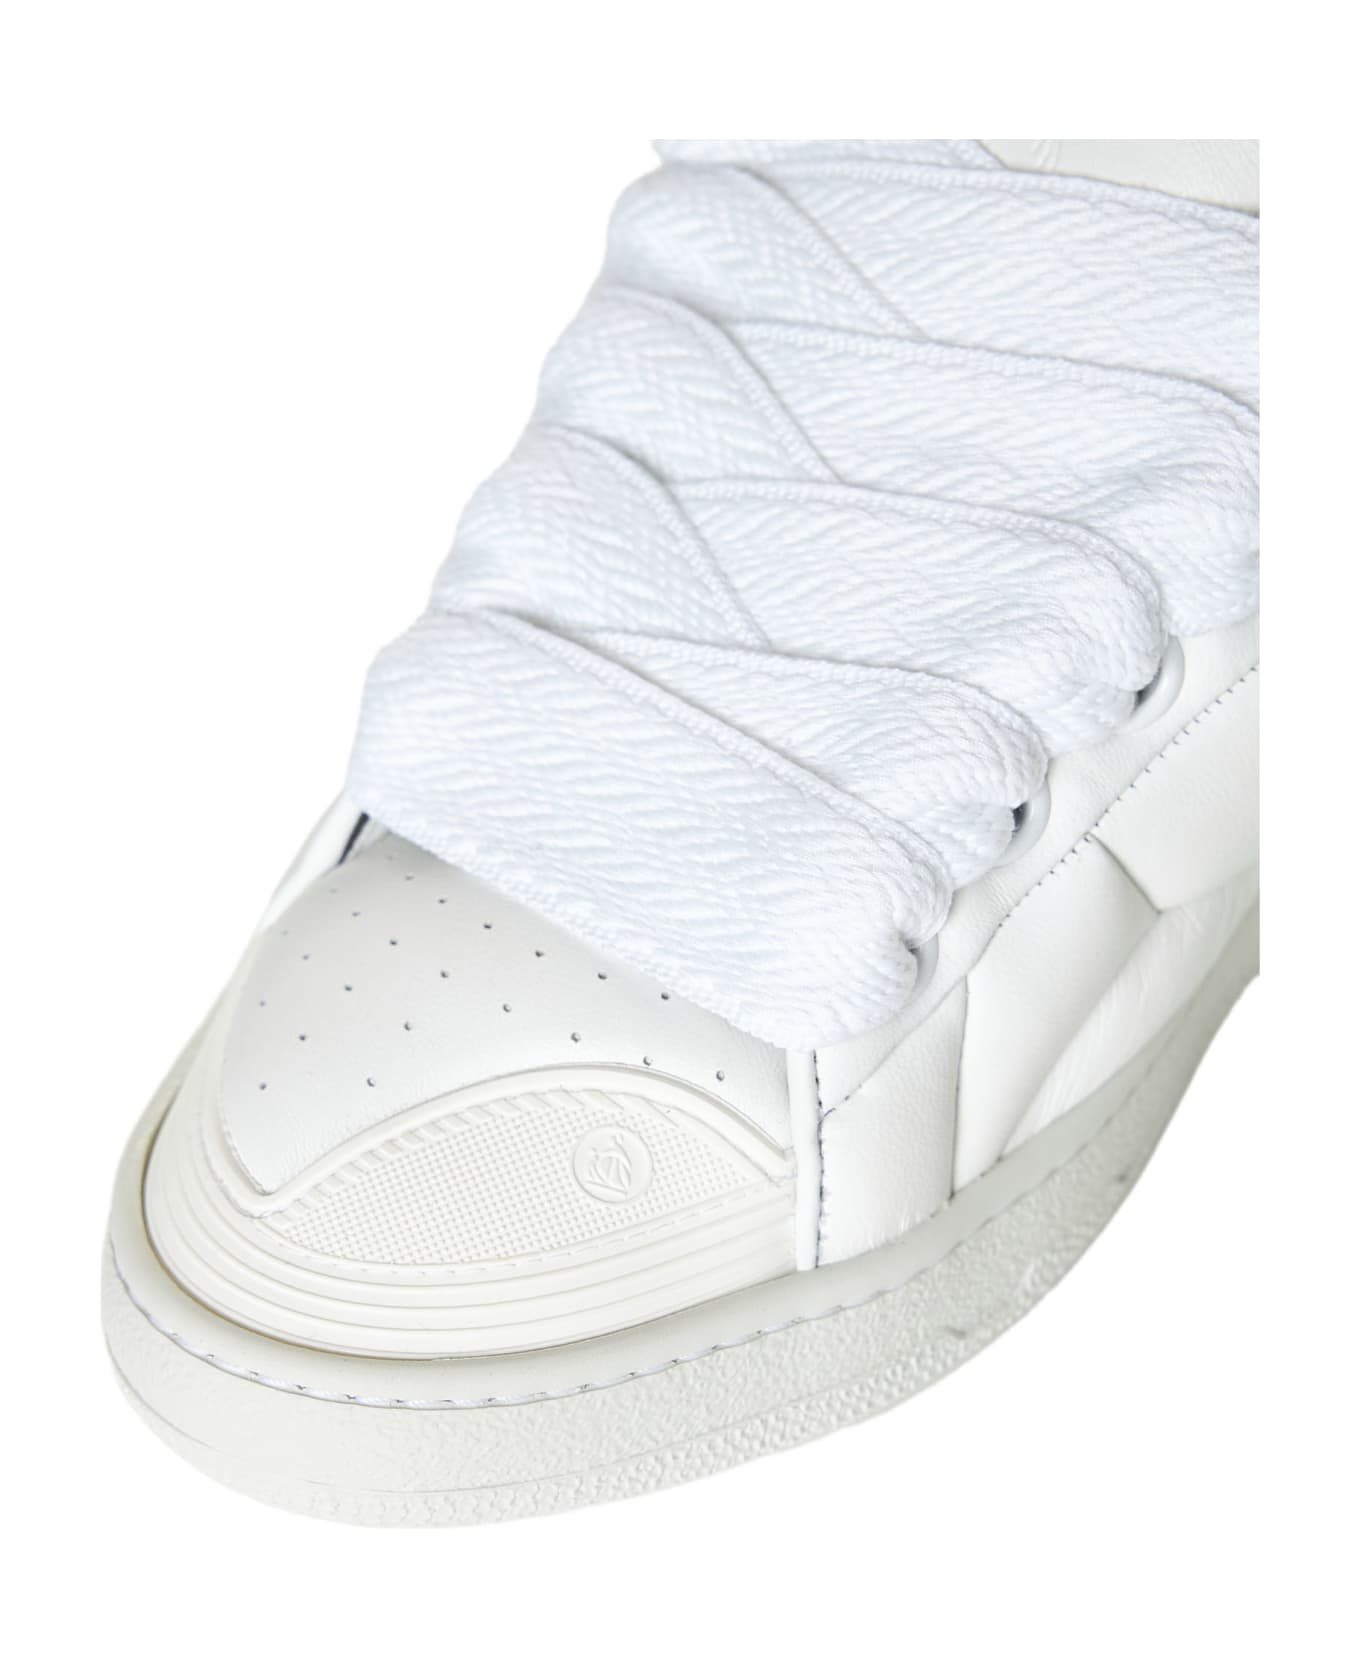 Lanvin Sneakers - White/white